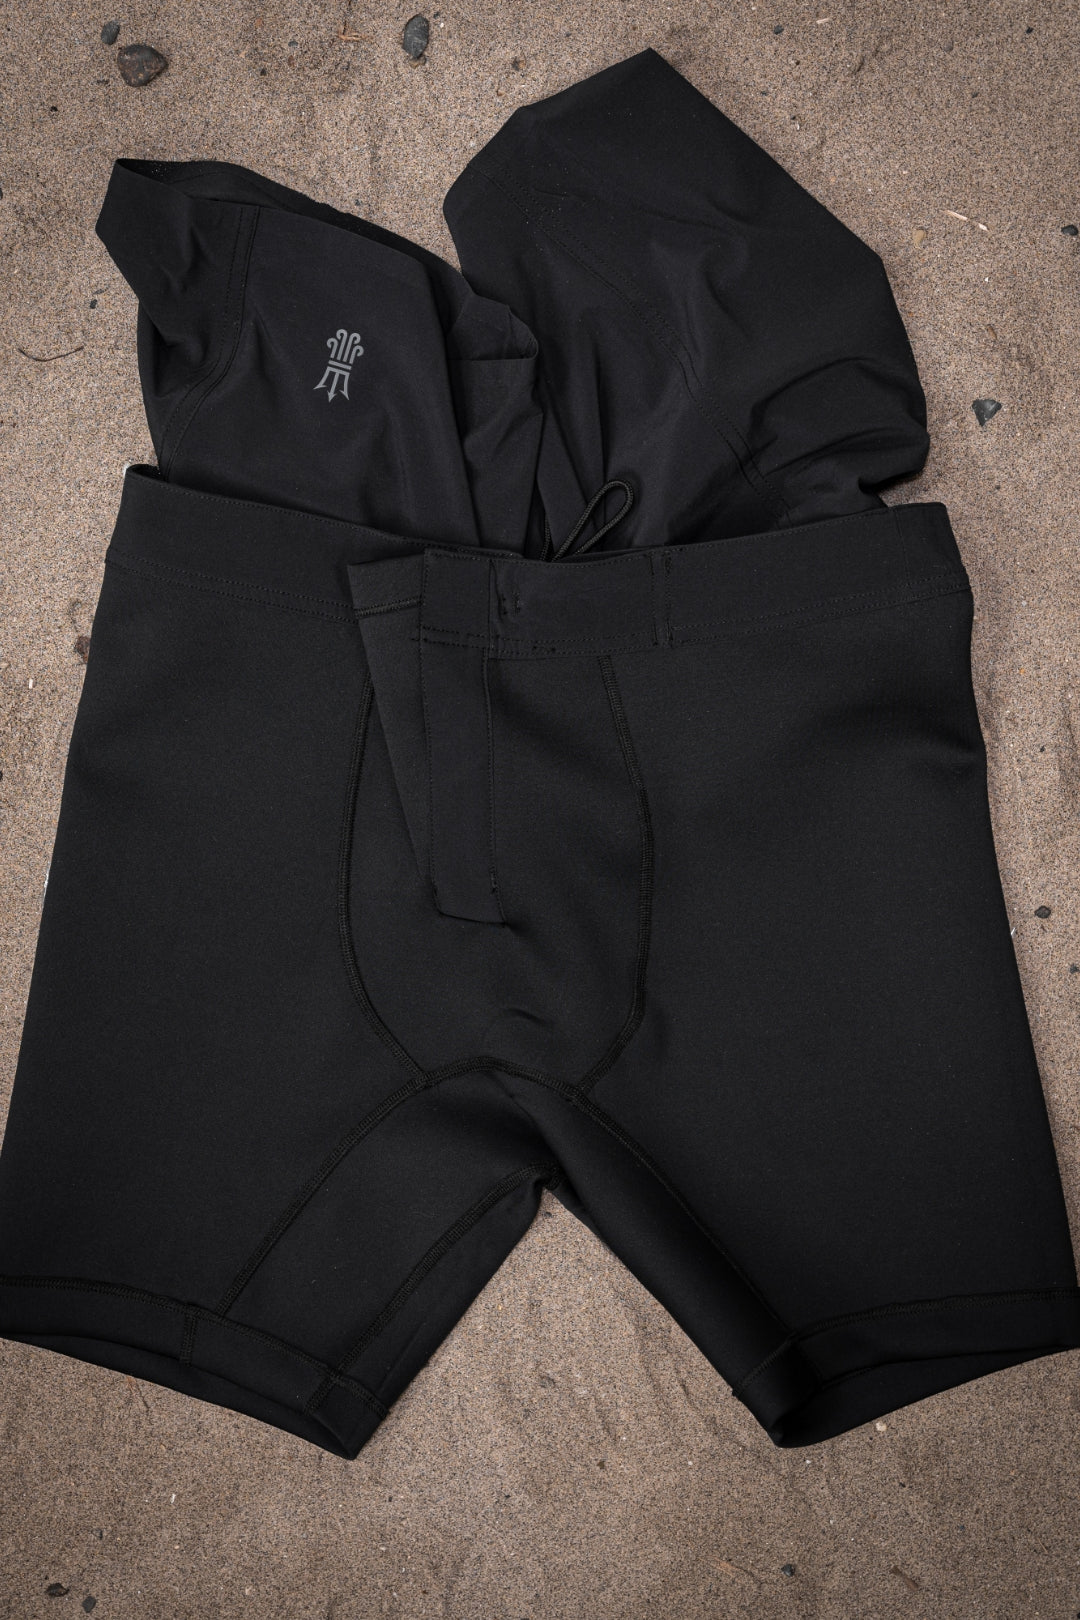 Wetsuit Lined Boardshorts ECO Black Drifties